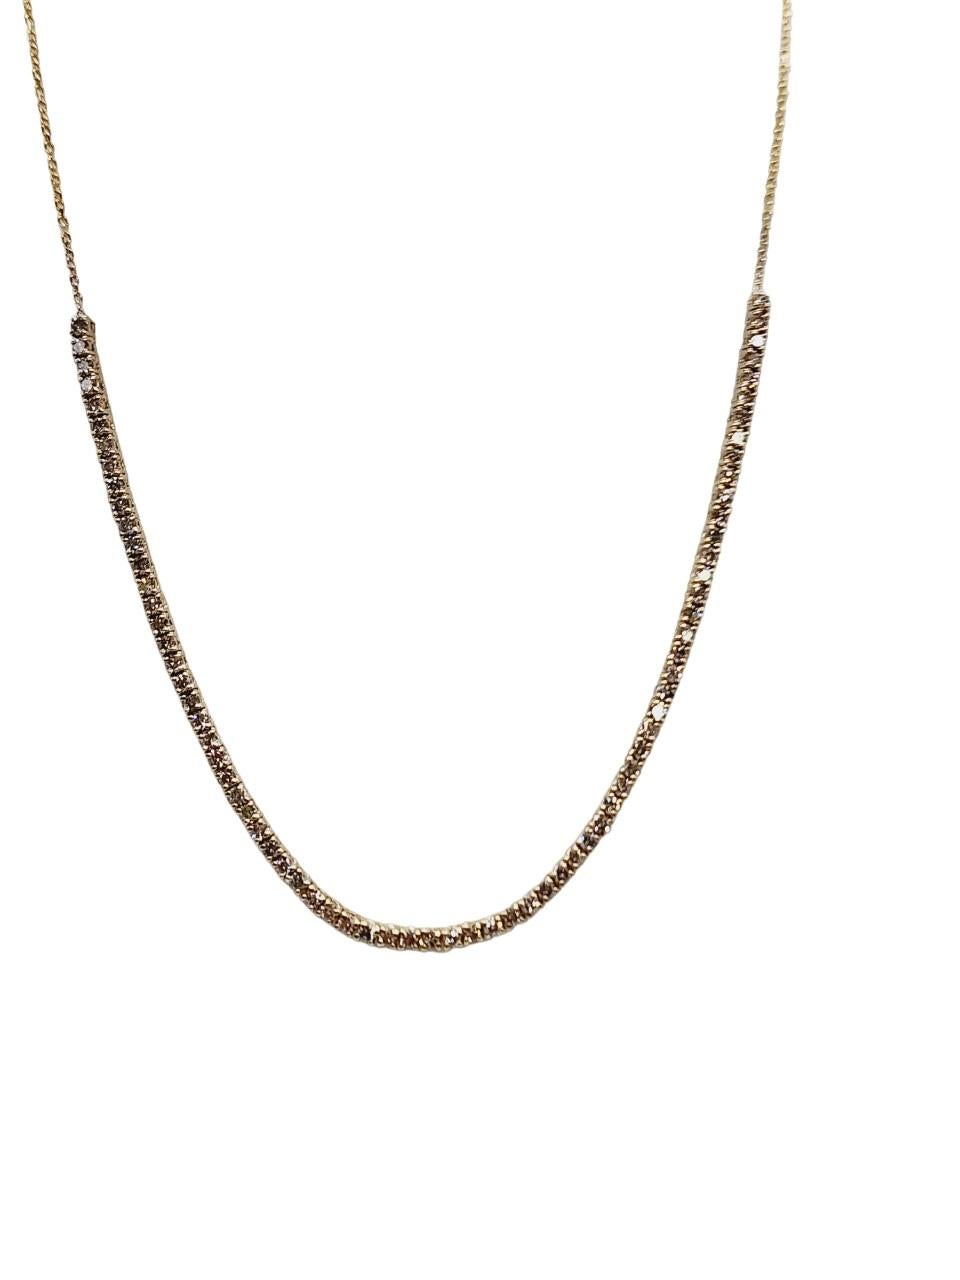 Round Cut 1.65 Carat Mini Diamond Necklace Chain 14 Karat Yellow Gold 16'' For Sale